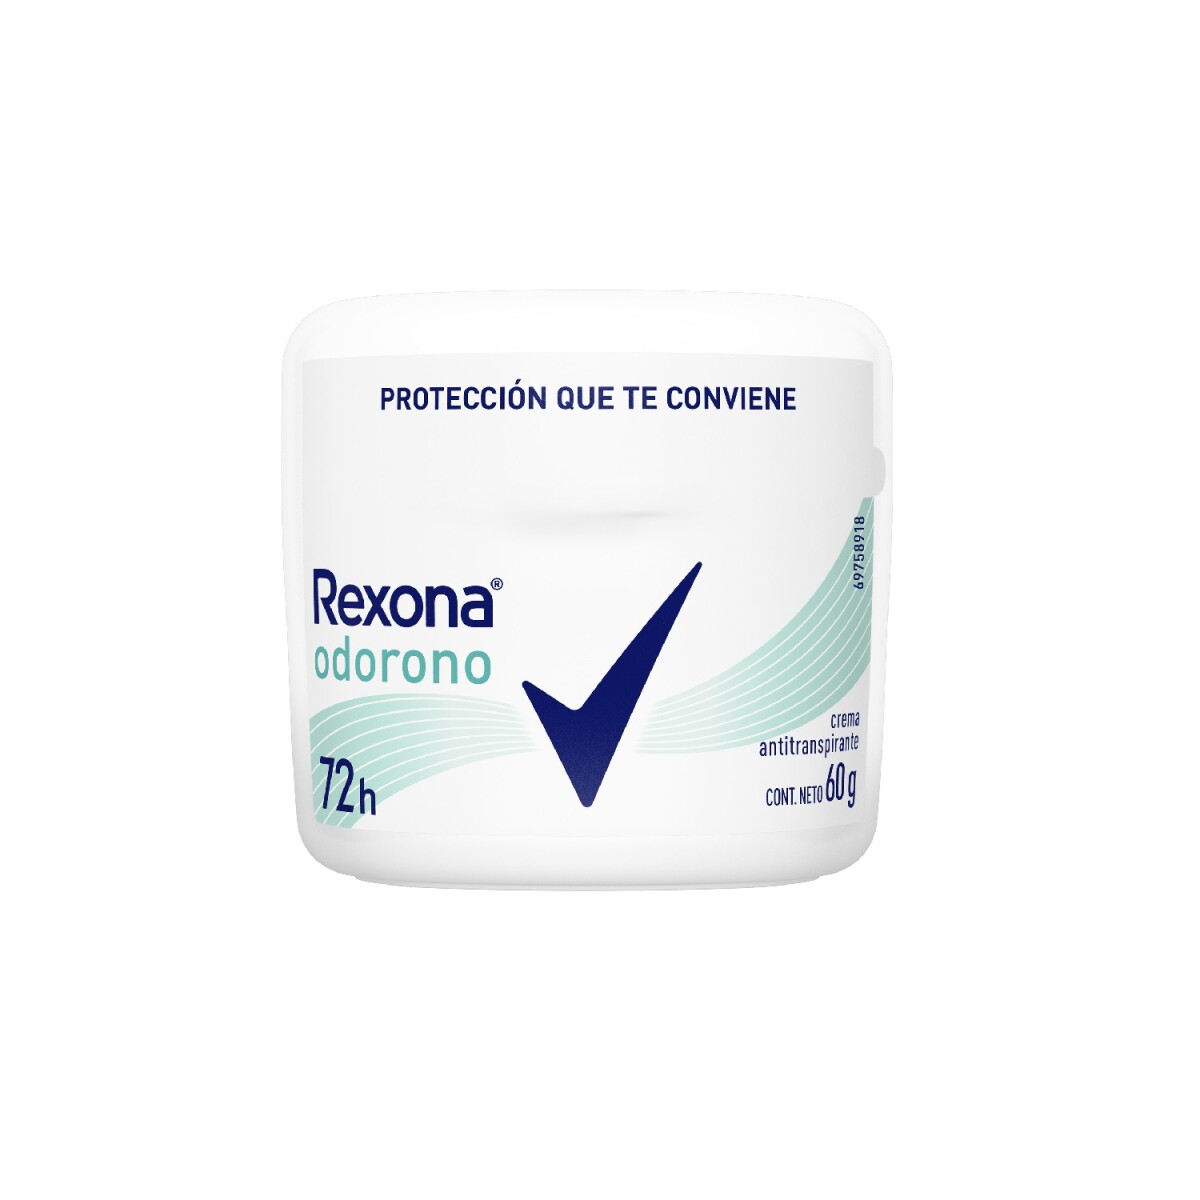 Rexona Desodorante Antitranspirante Crema Odorono Femeninom 